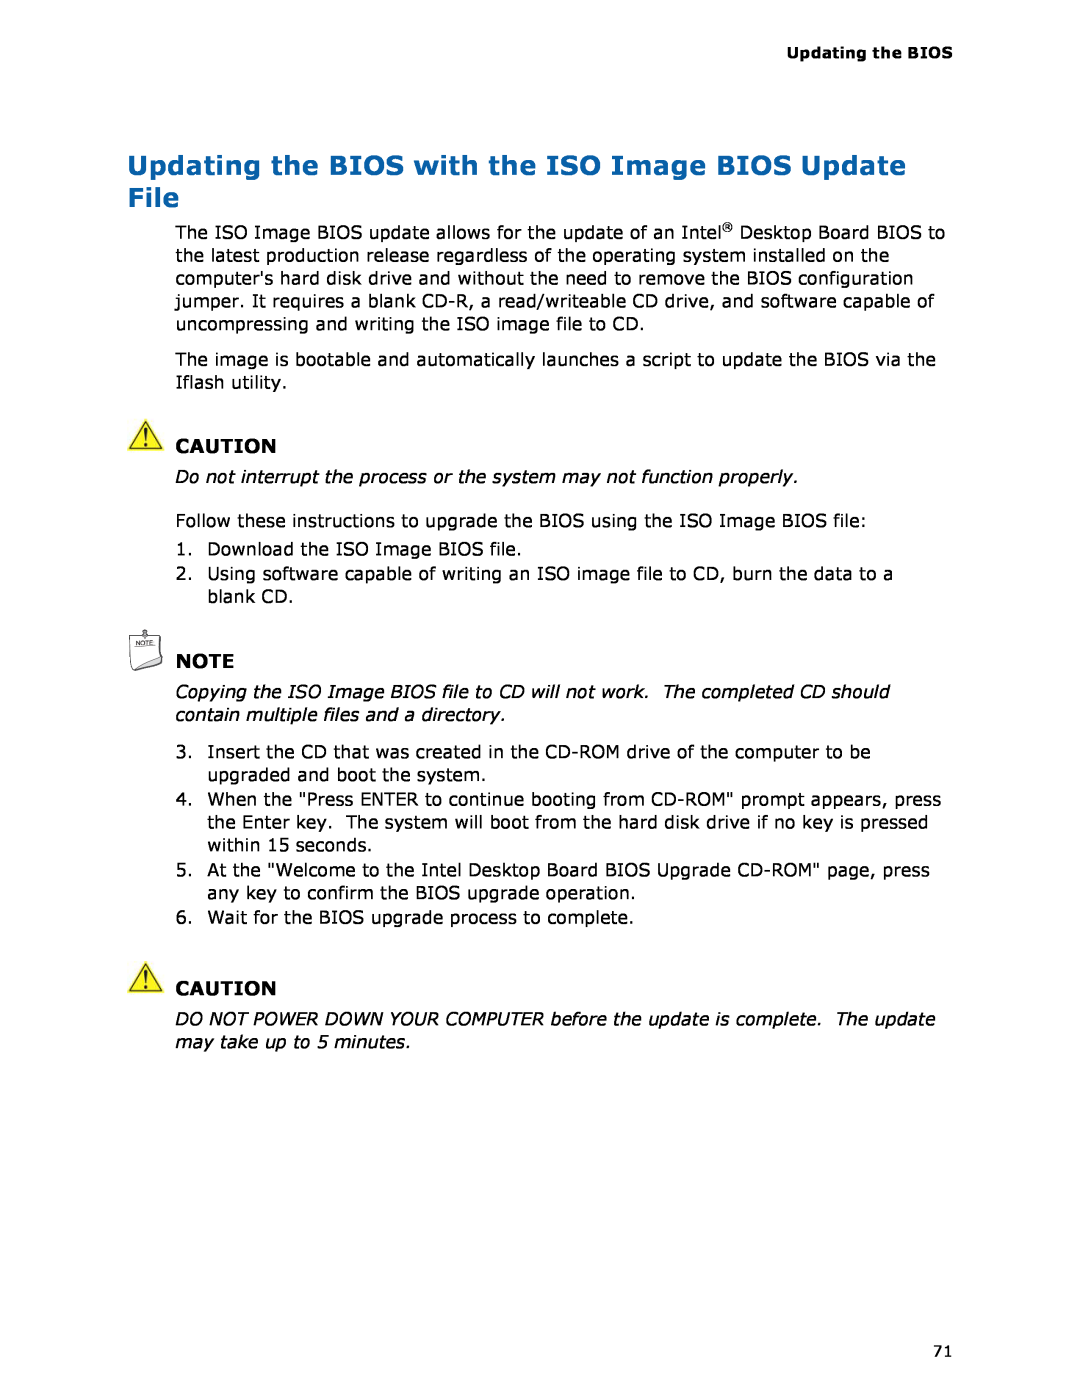 Intel DQ57TM manual Download the ISO Image BIOS file 